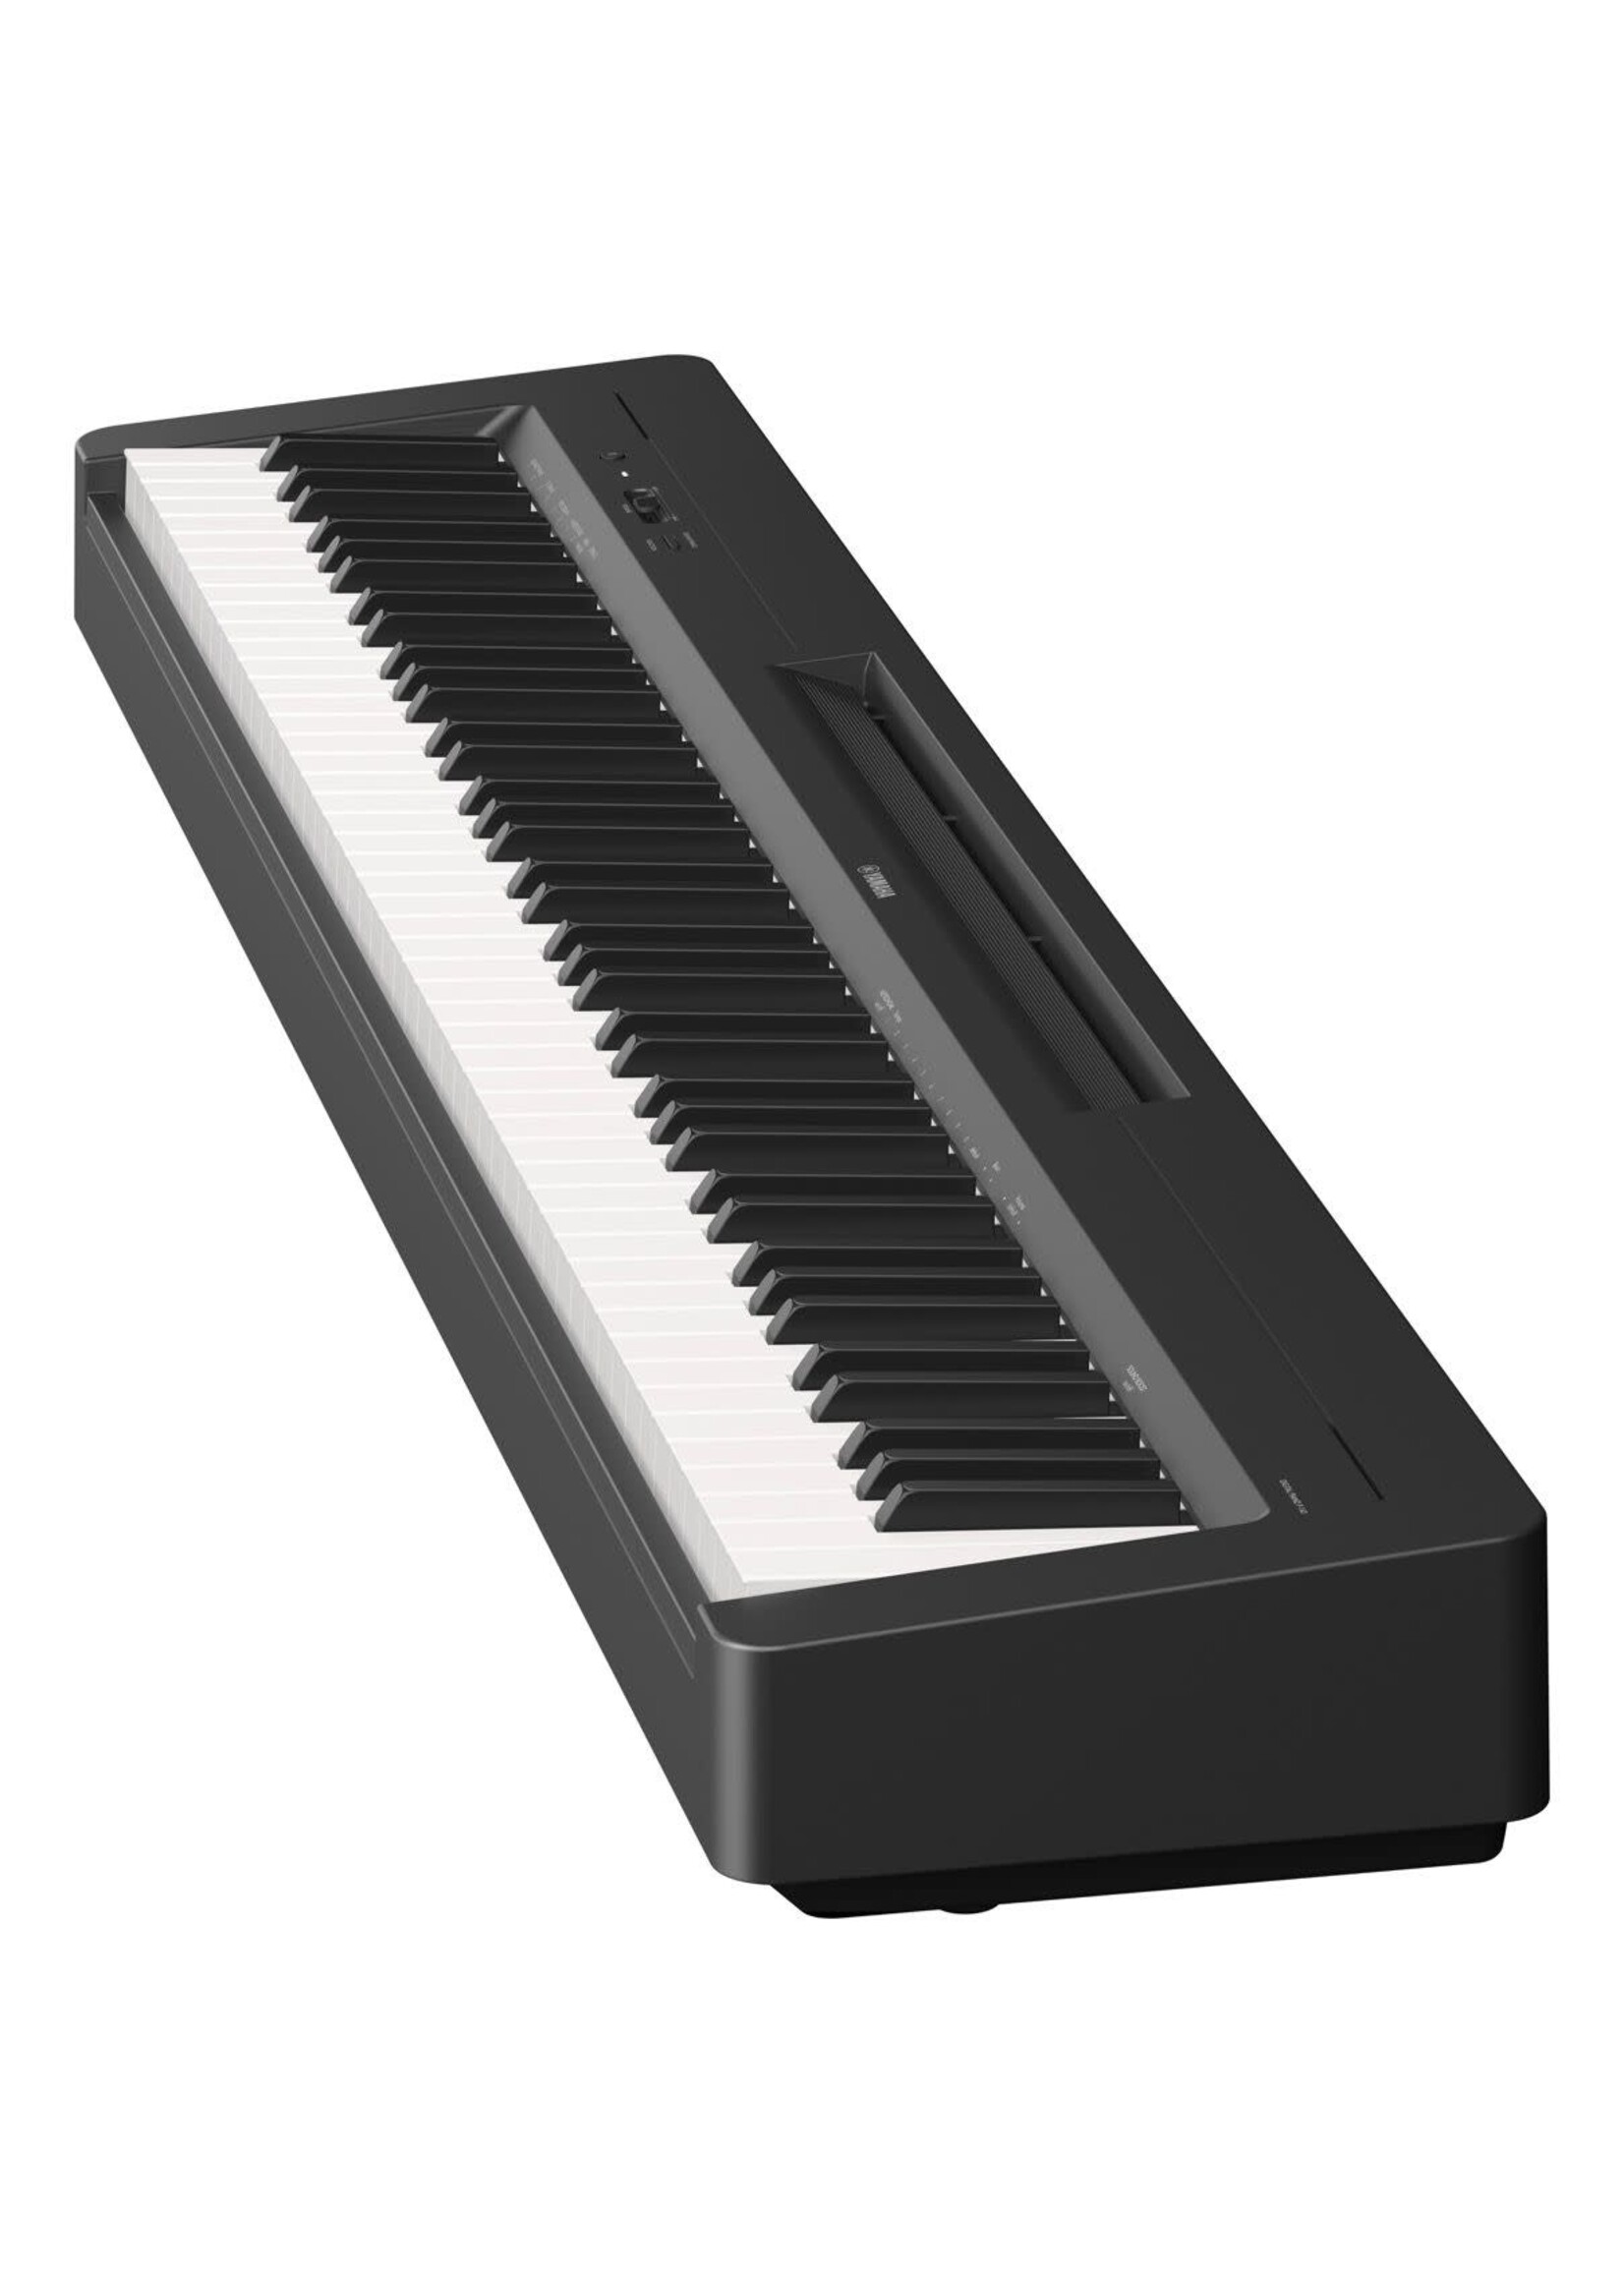 Yamaha Yamaha P-143B 88-key Portable Digital Piano - Black